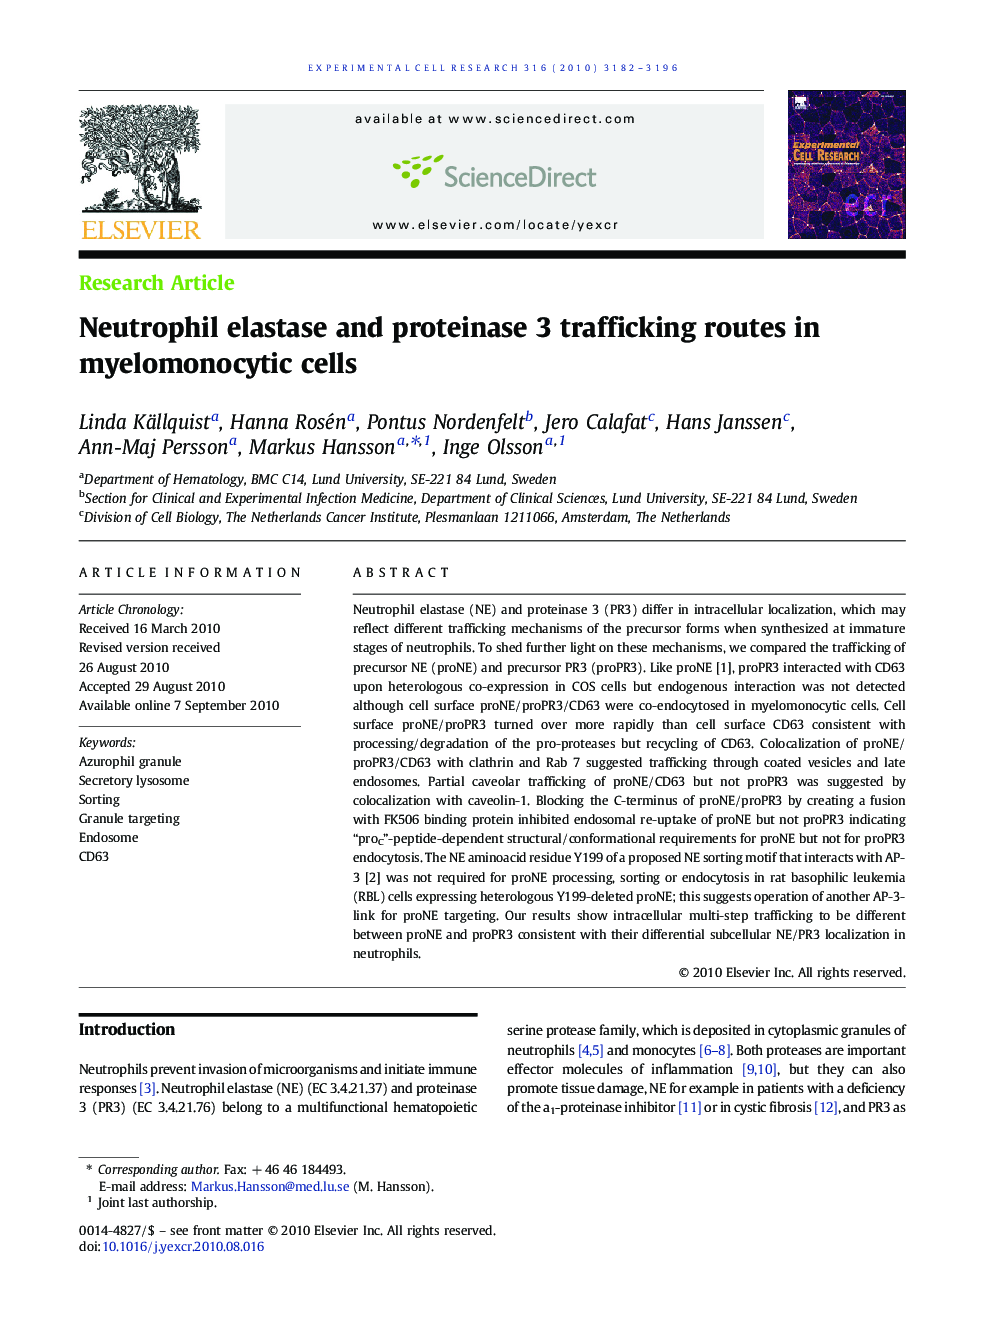 Neutrophil elastase and proteinase 3 trafficking routes in myelomonocytic cells